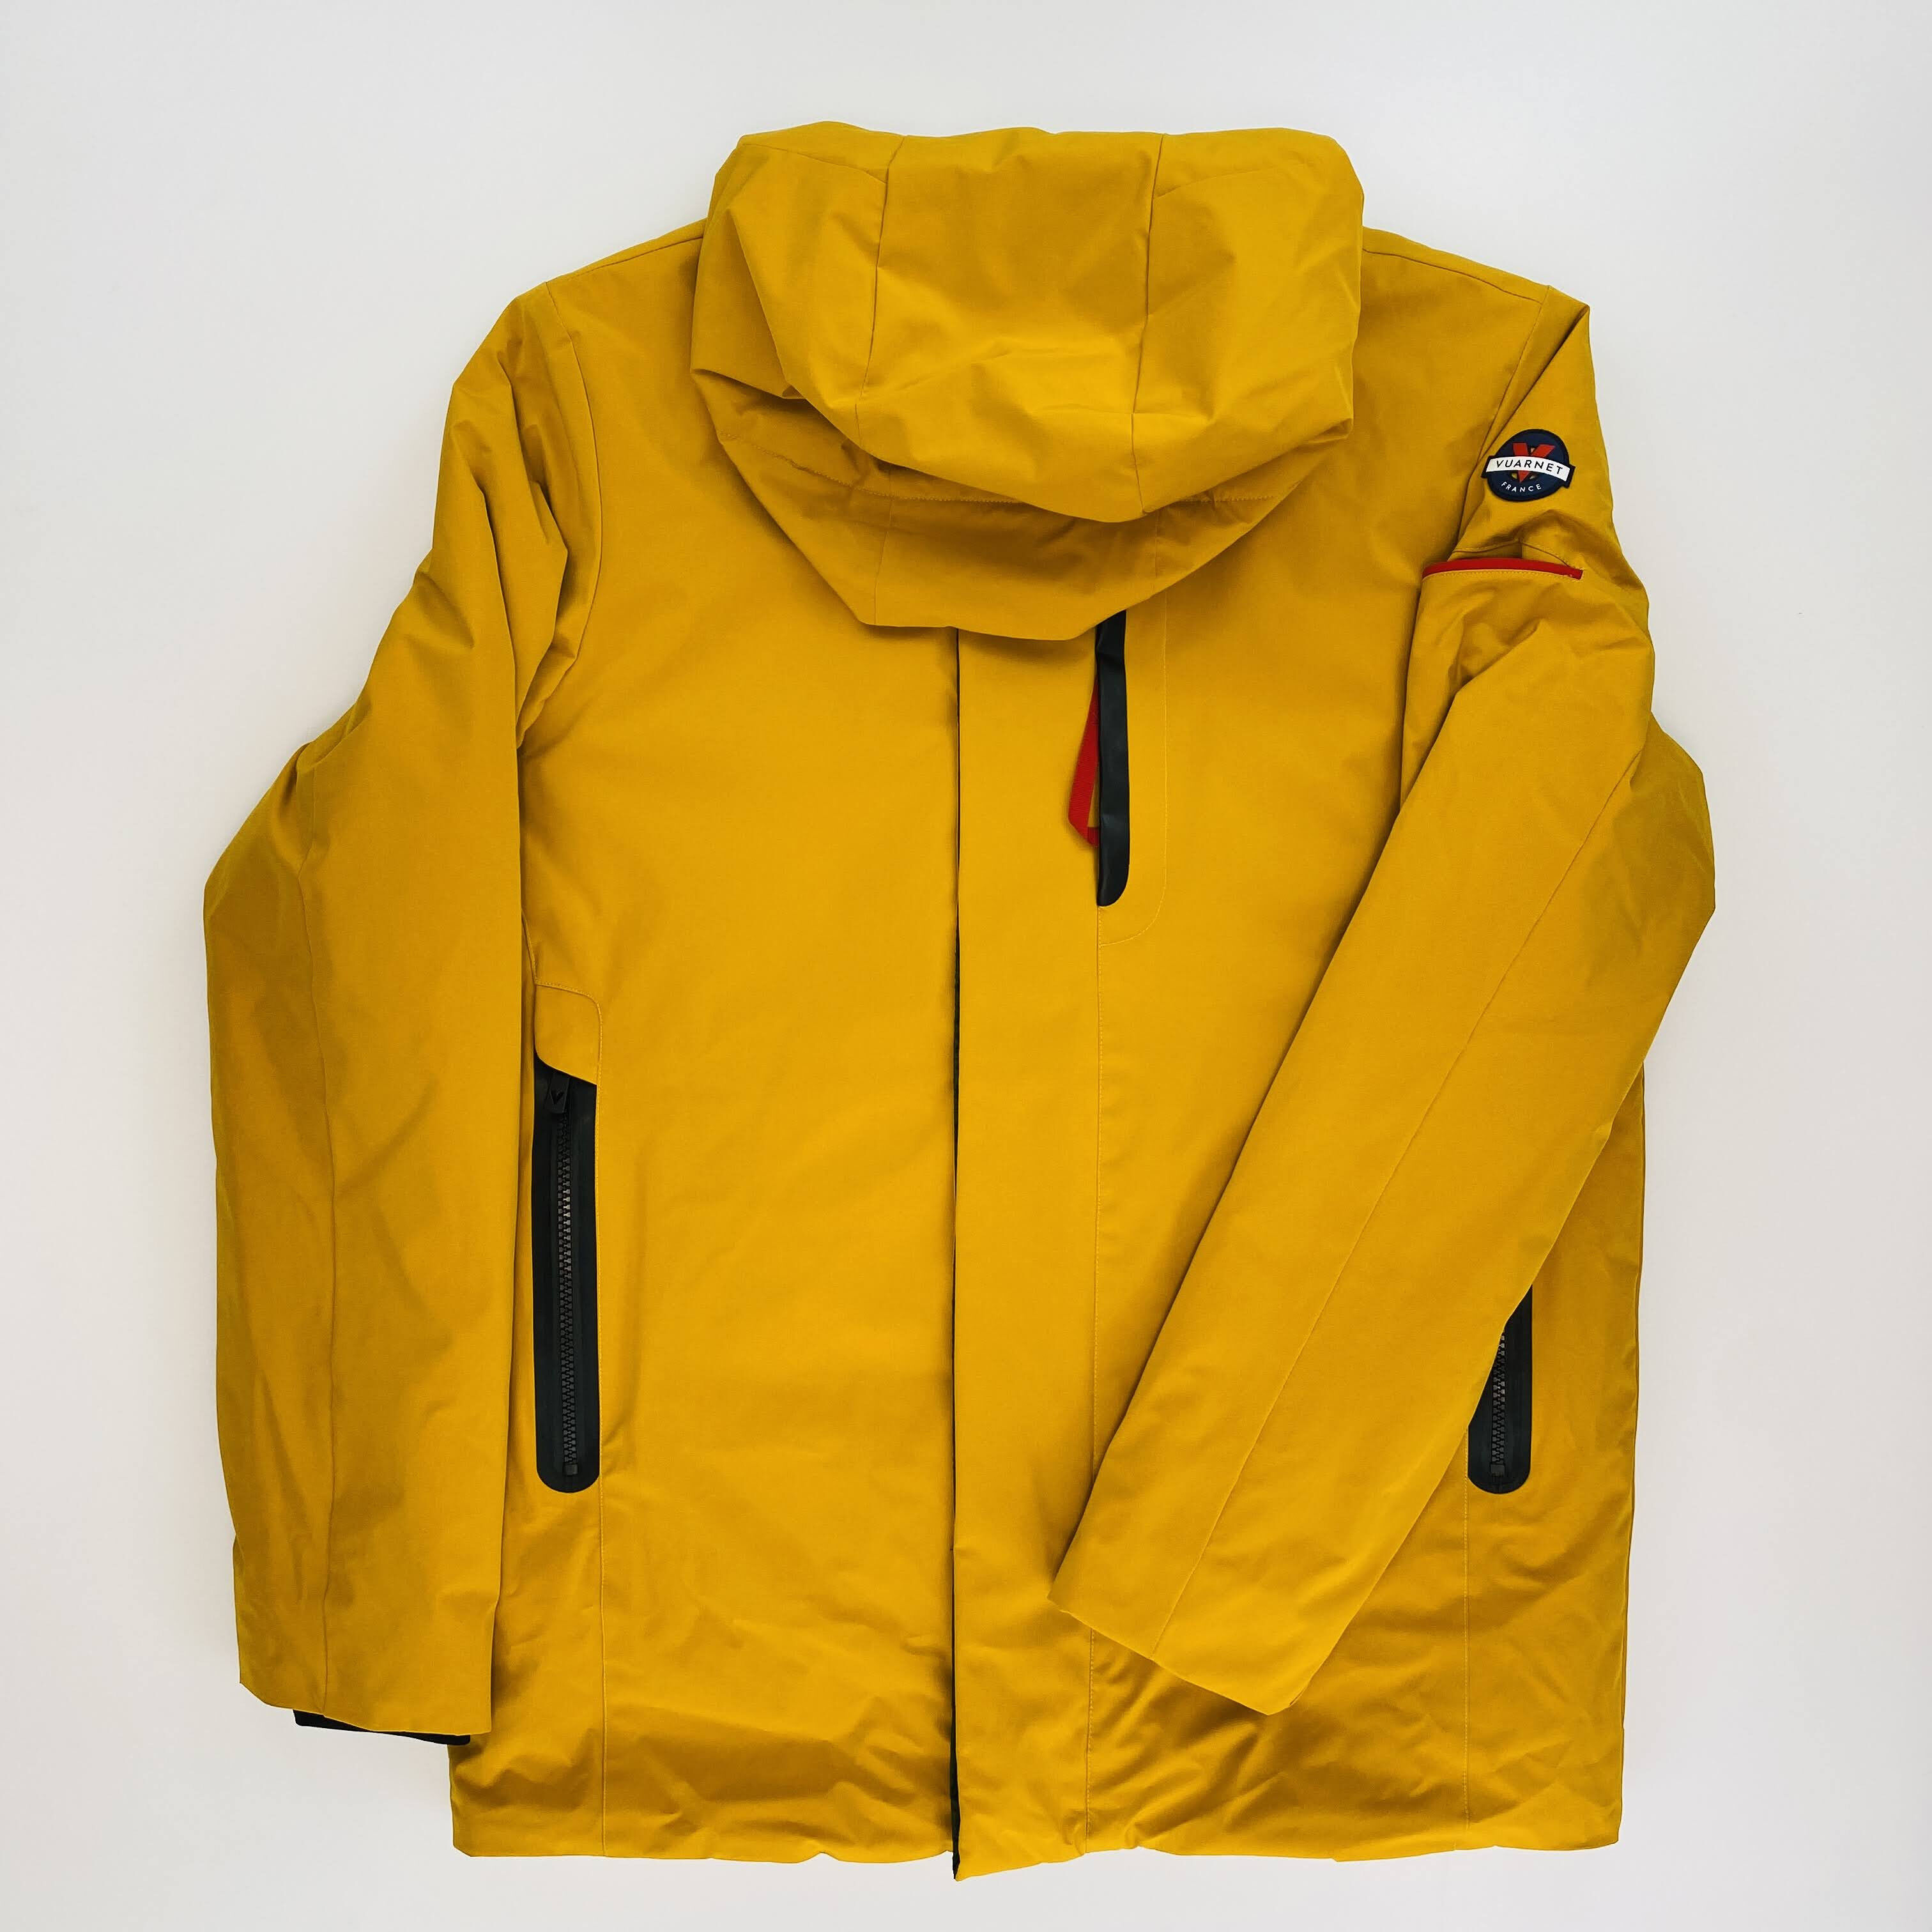 Vuarnet Orta Jacket - Second Hand Synthetic jacket - Men's - Yellow - L | Hardloop